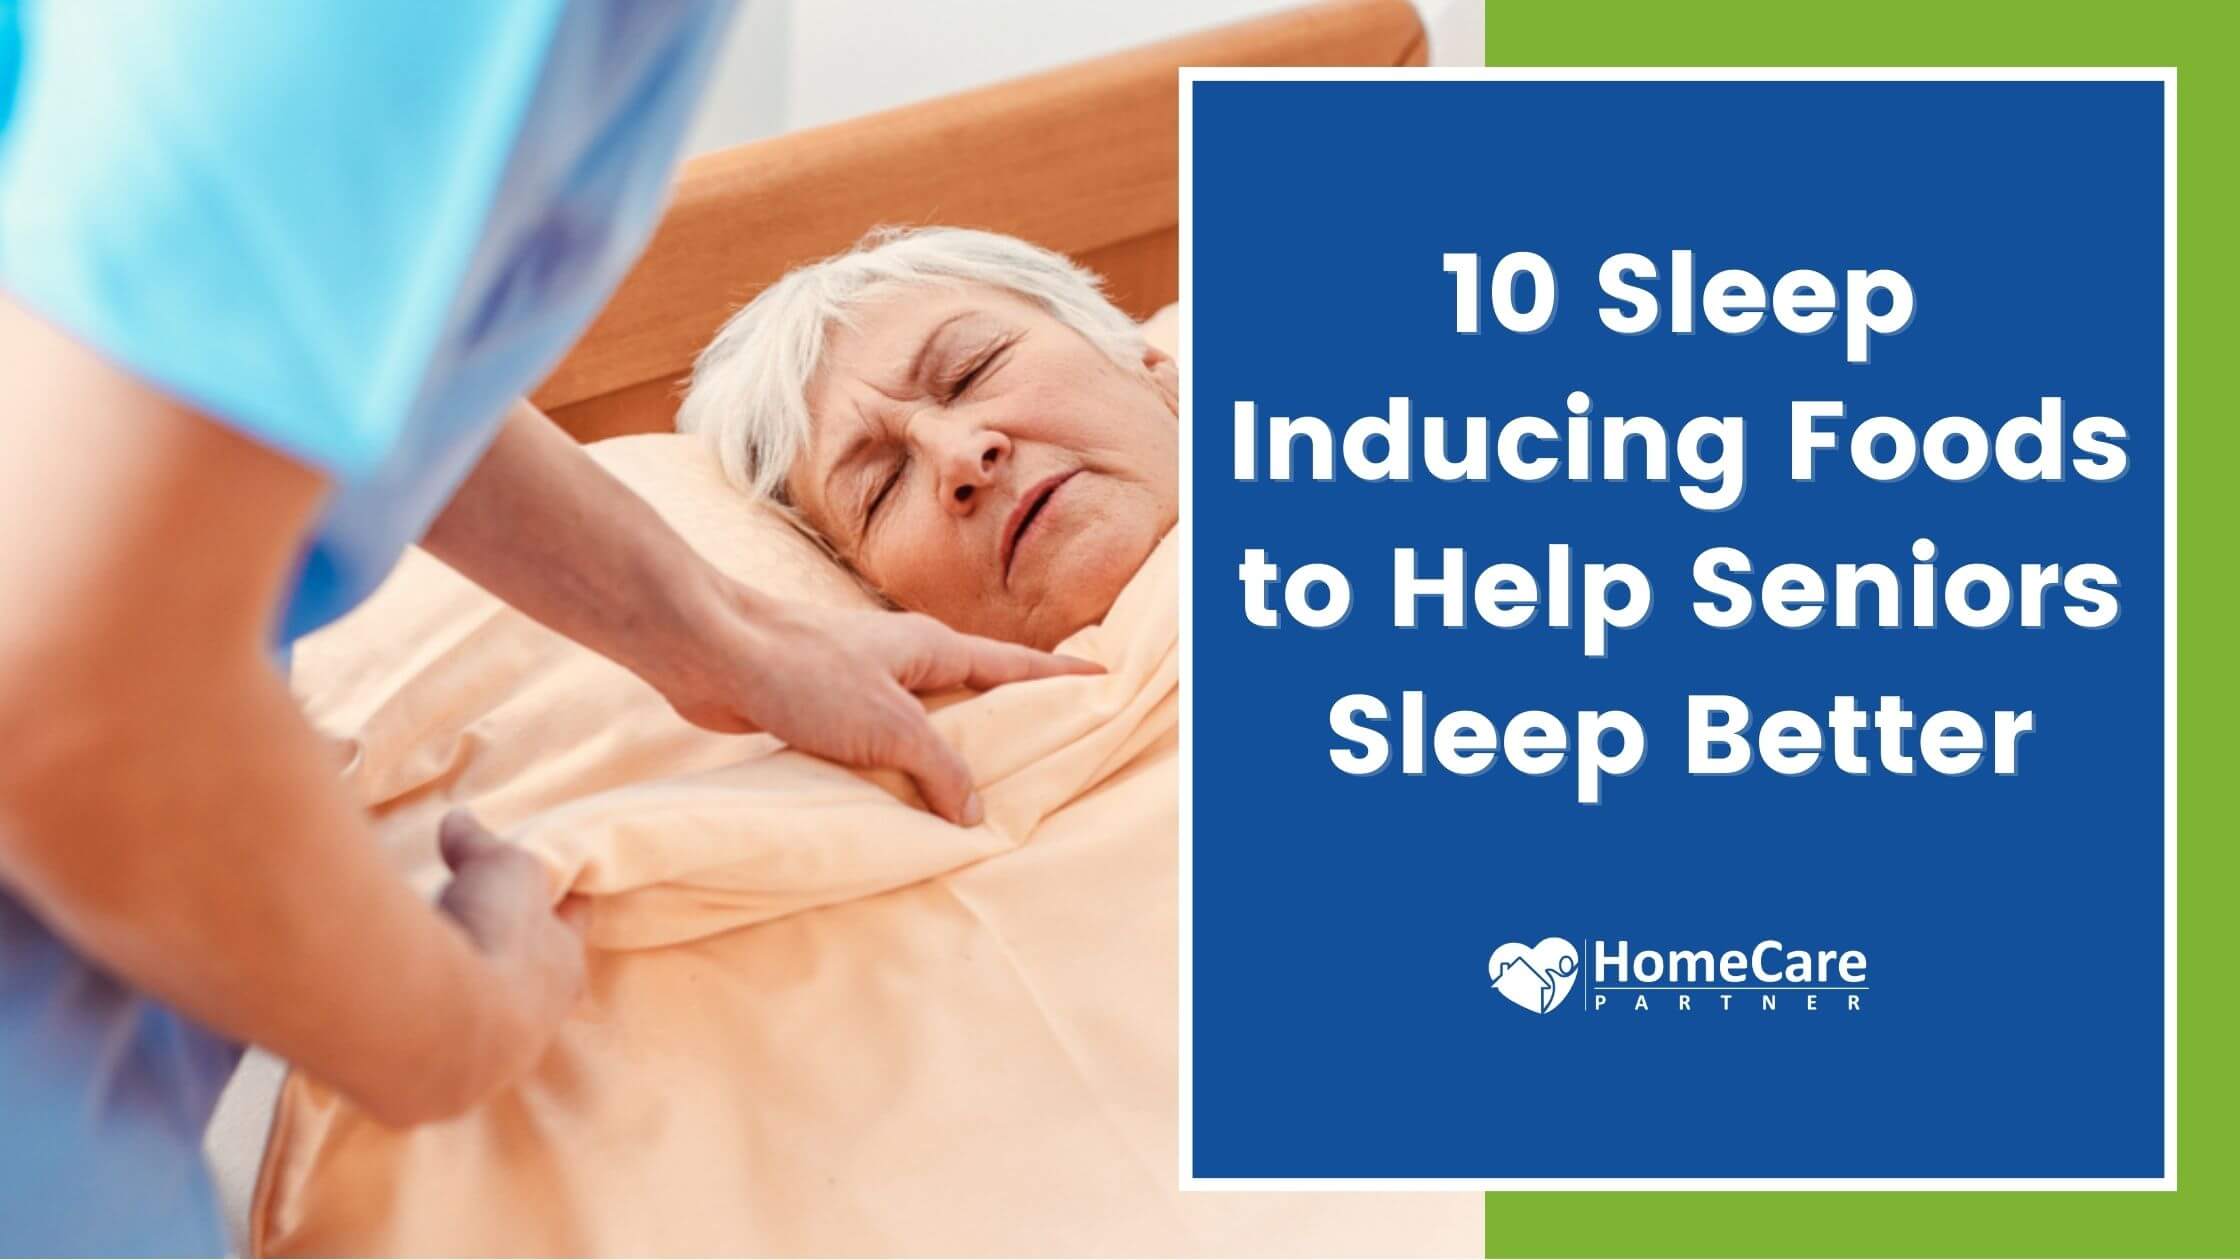 10 Sleep-Inducing Foods to Help Seniors Sleep Better